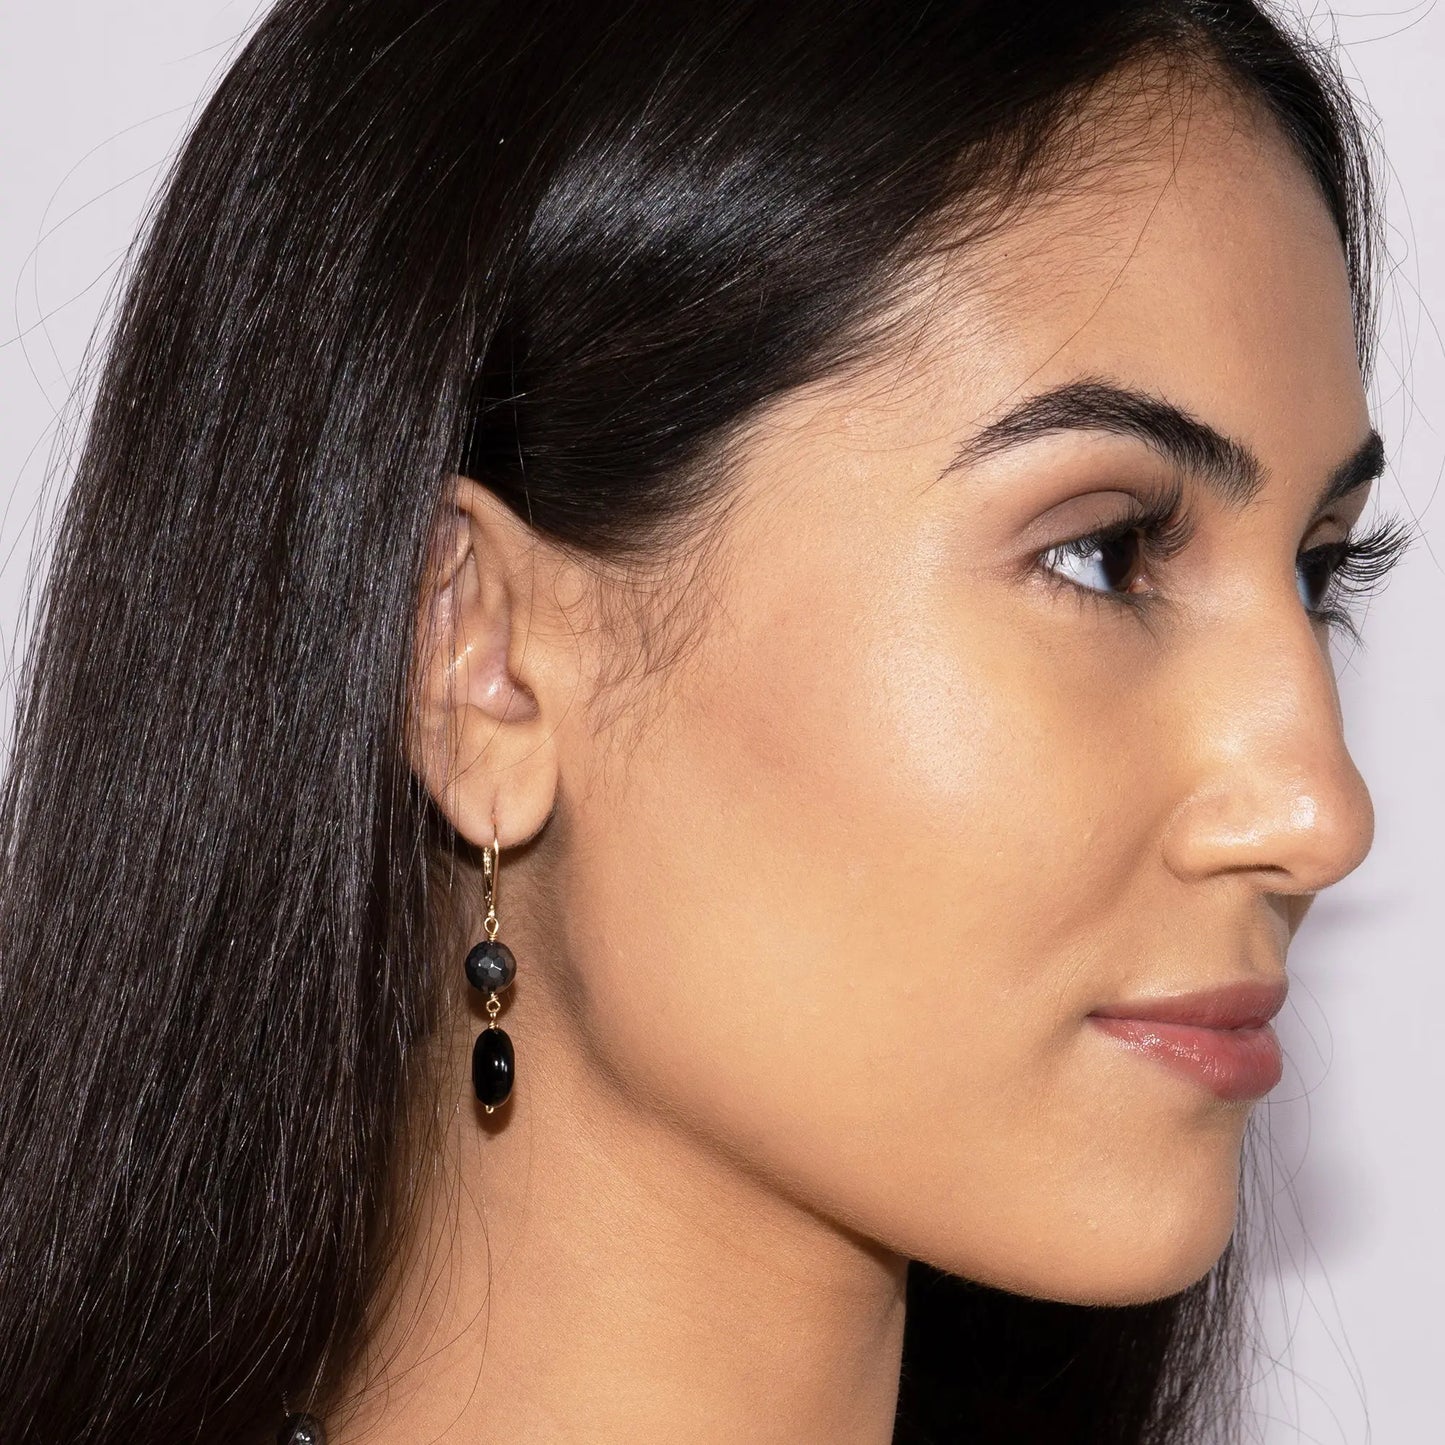 Liana Black Onyx & Hematite Earrings Jewelmak Shop